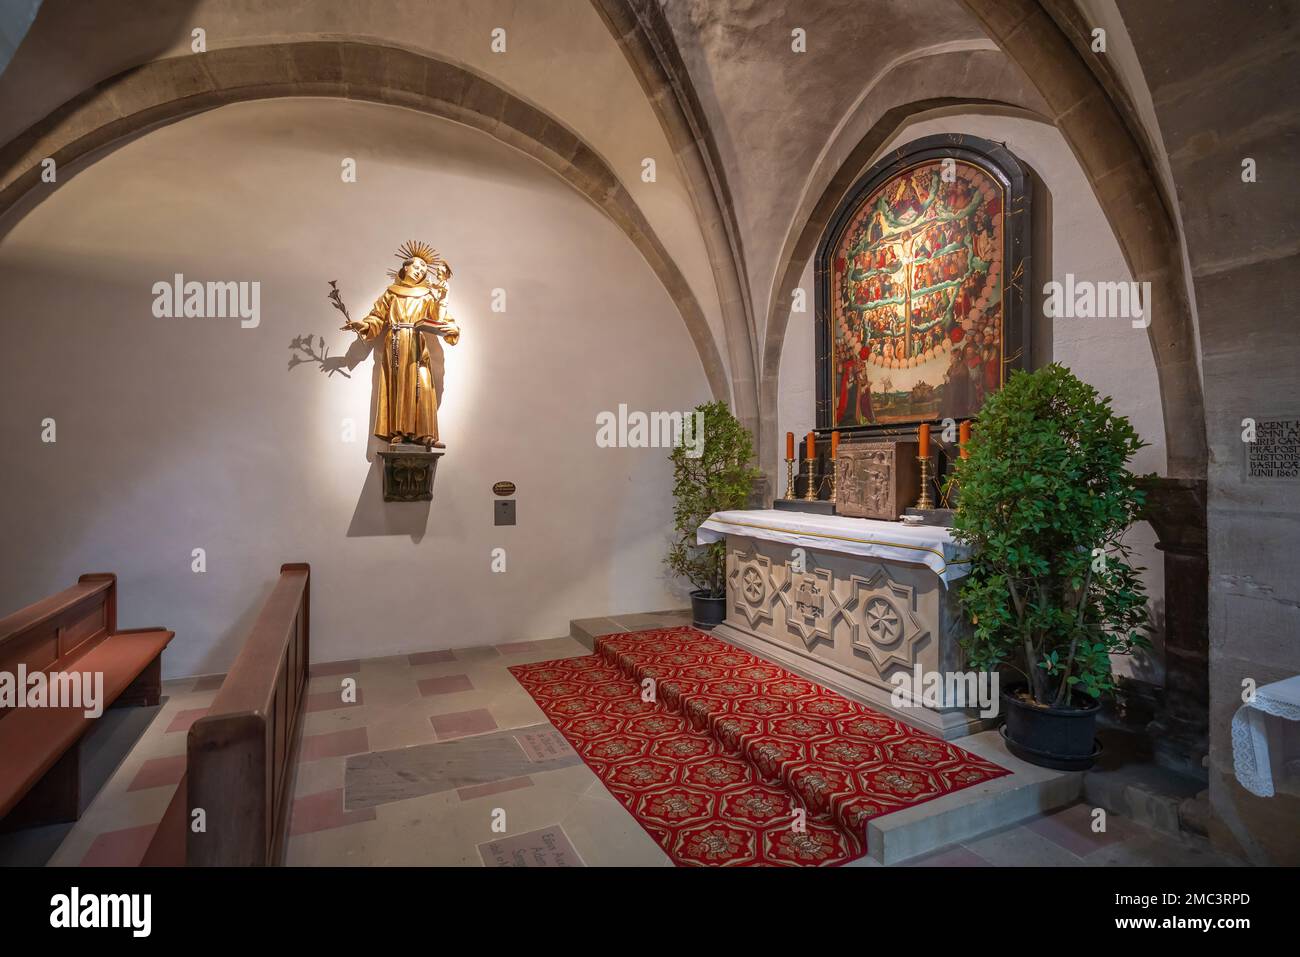 Sakramentale Kapelle und Rosarienmalerei im Inneren des Bamberger Doms - Bamberg, Bayern, Deutschland Stockfoto